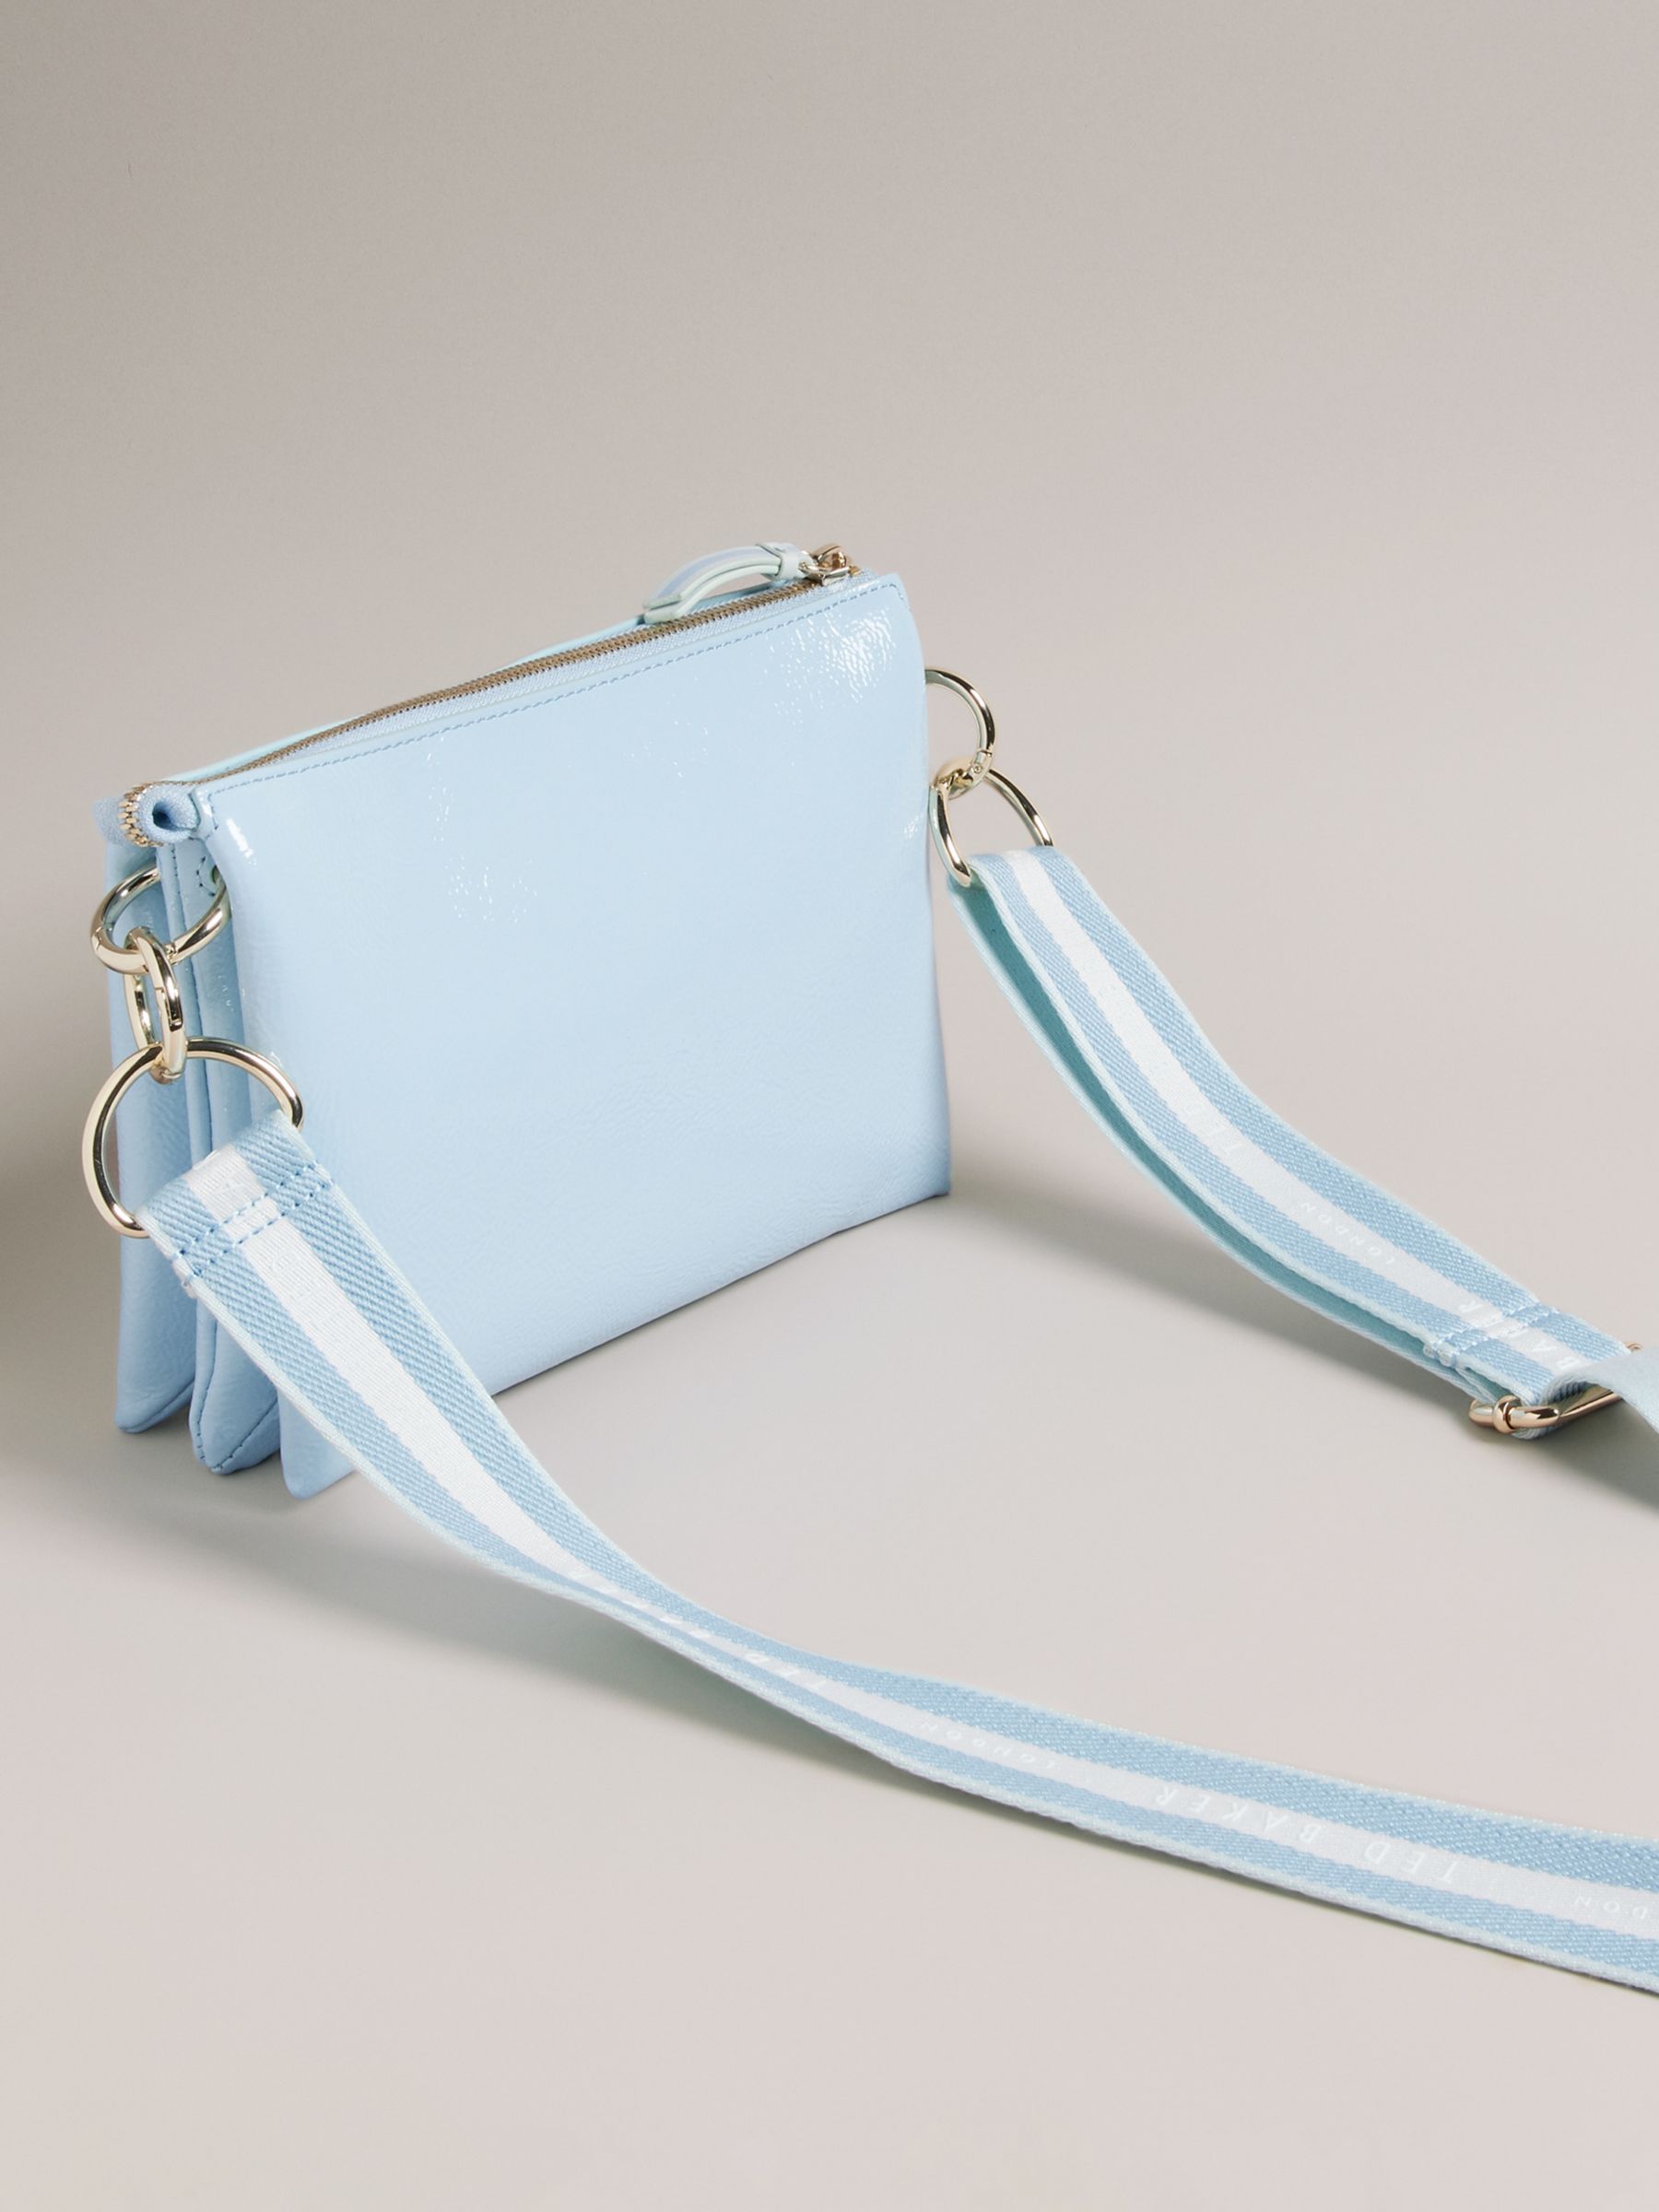 Ted Baker Darceyy Branded Strap Patent Leather Crossbody Bag, Light Blue, Stnd